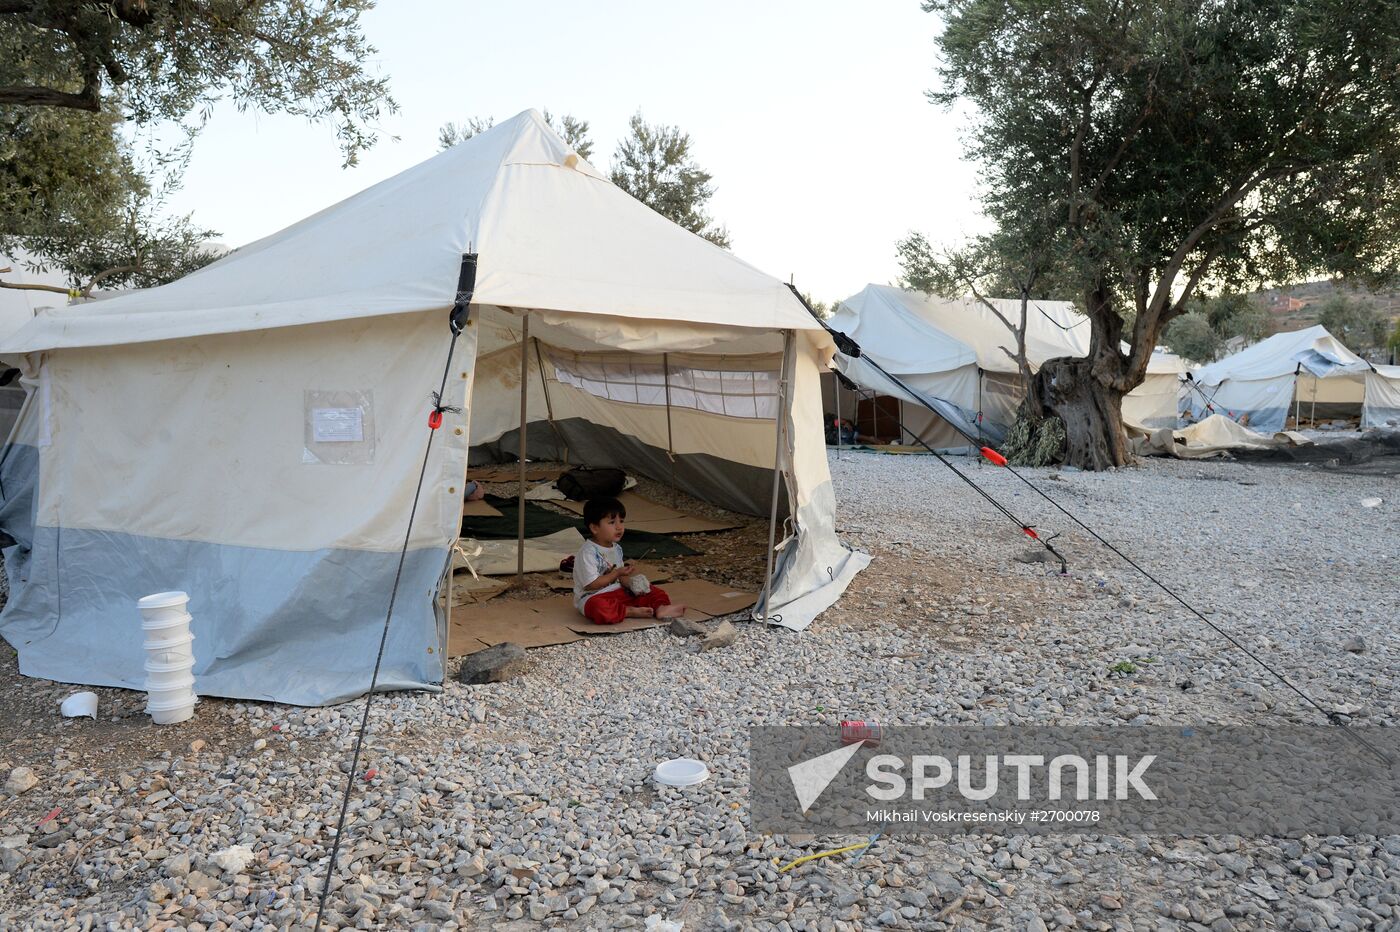 Greece. Refugees on Lesbos Island